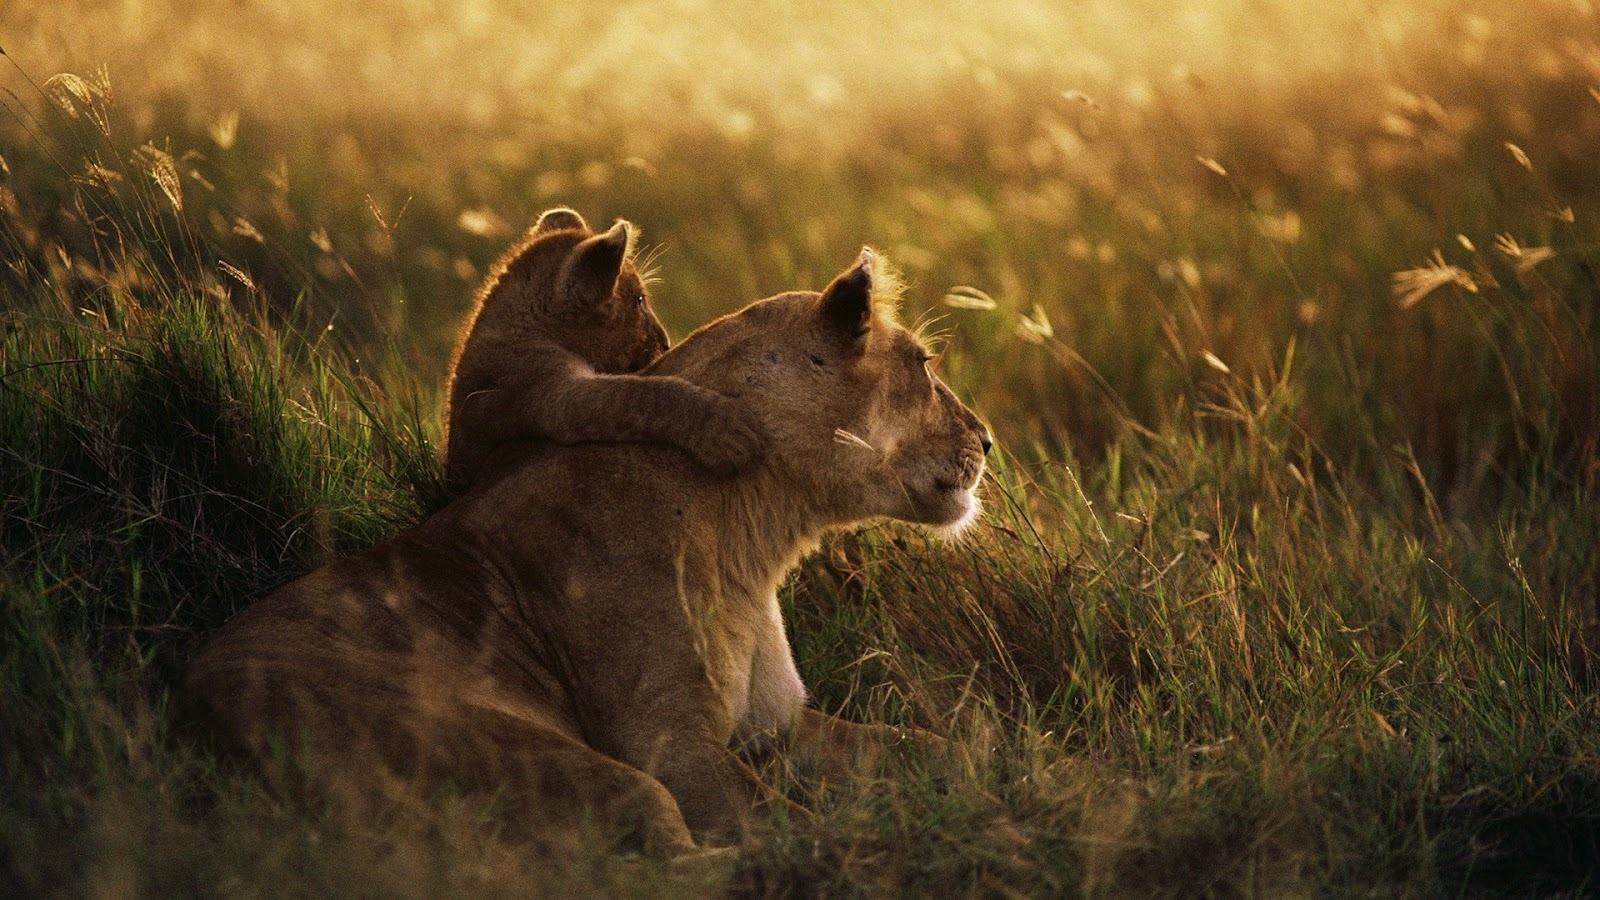 136362_cute-baby-lion-hugs-mother-hd-wallpaper_1600x900.jpg